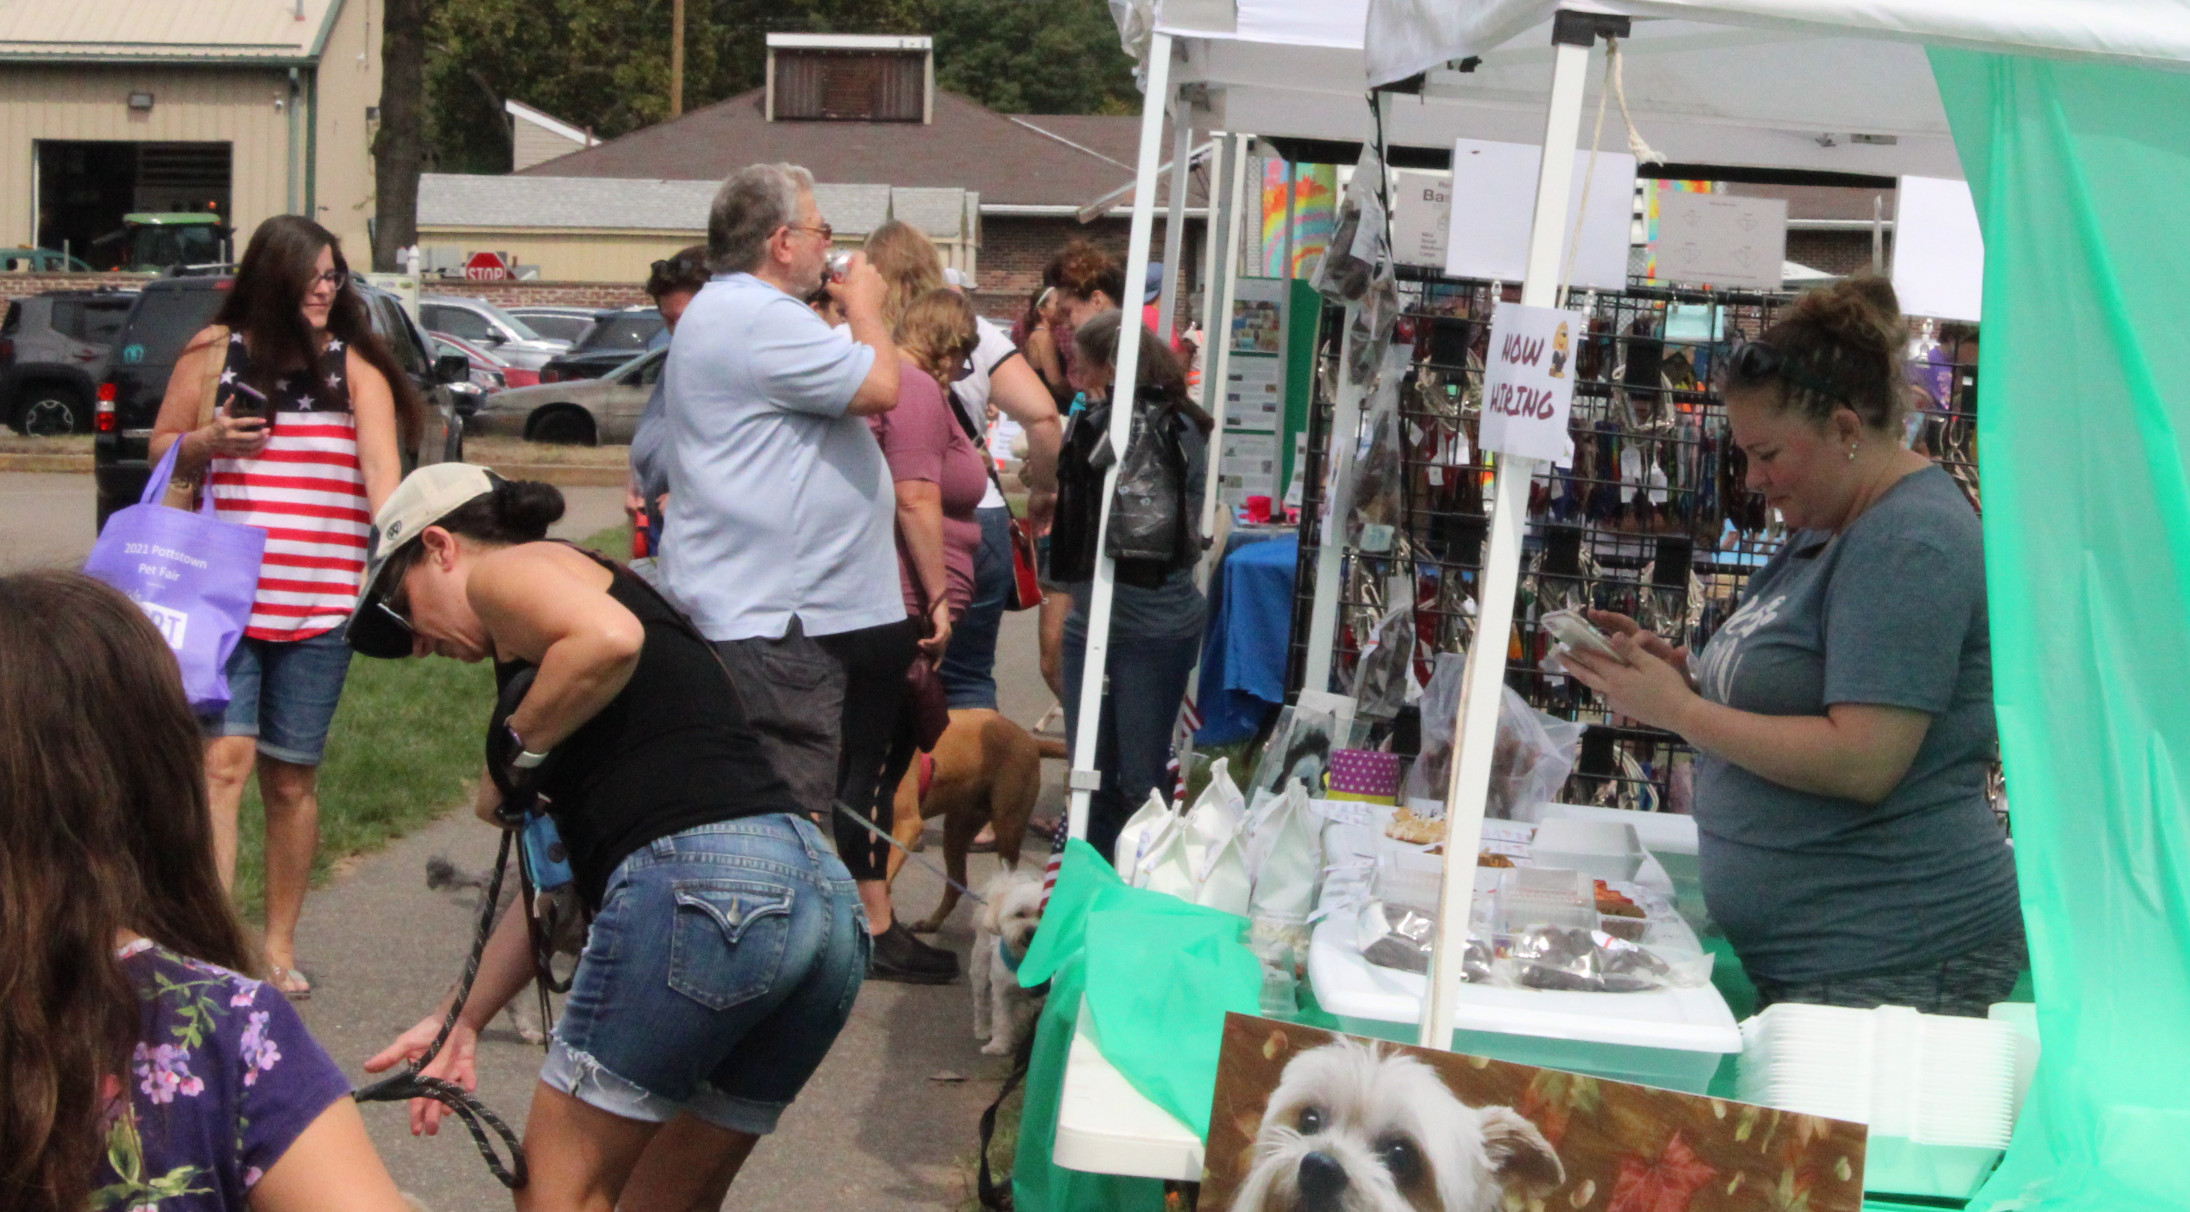 Pottstown Pet Fair Unites Animals with Future Families